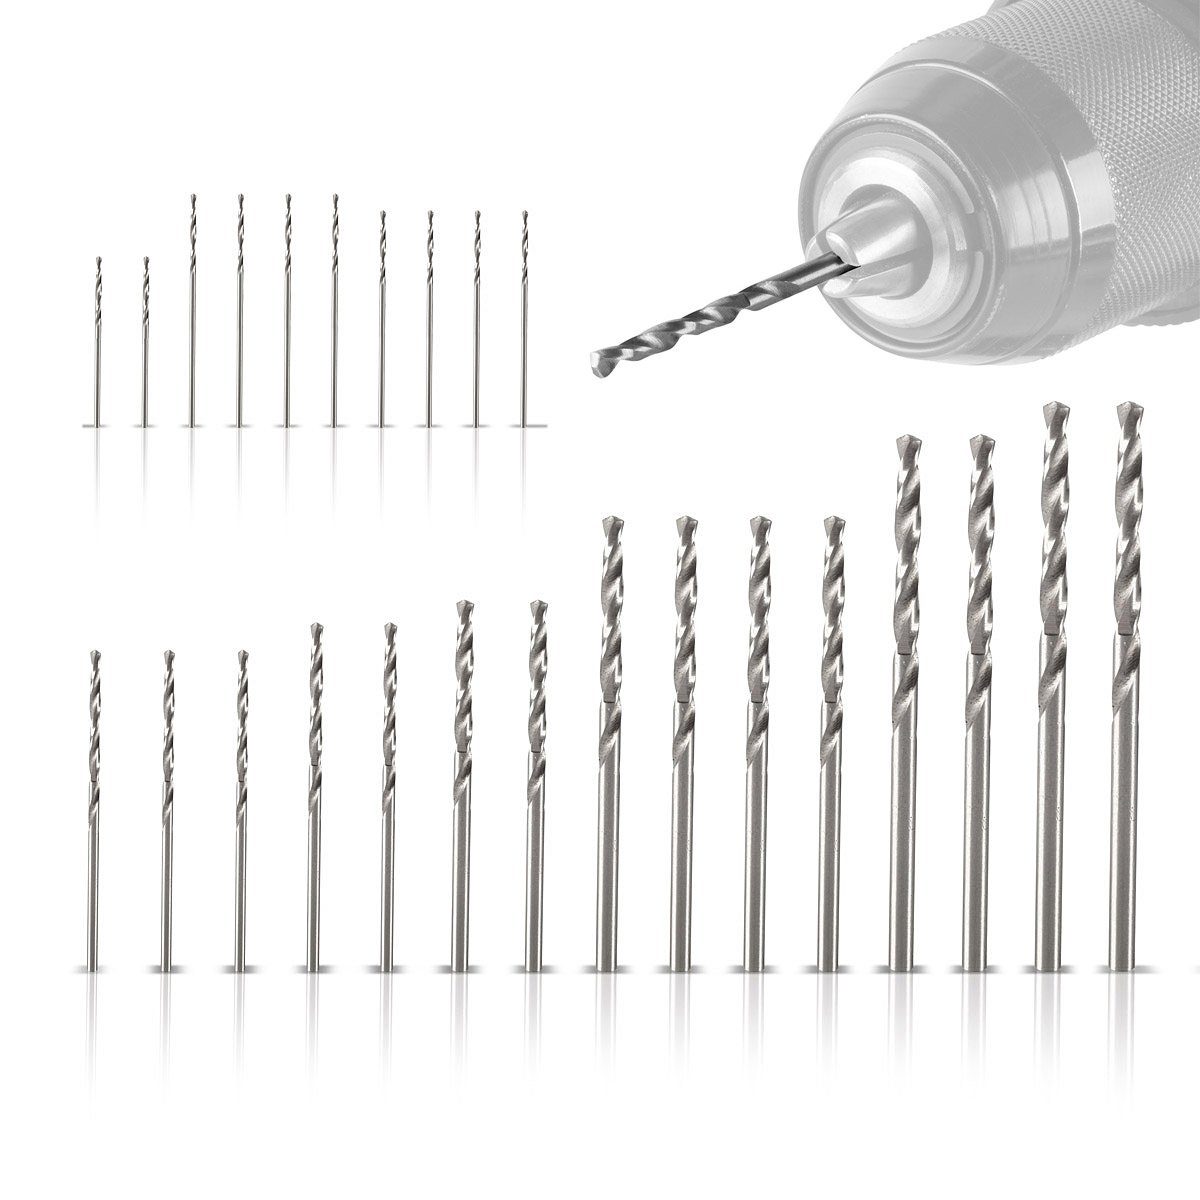 STAHLWERK Bohrersatz HSS Mini Bohrer Set 25 Teile 0,5-3,0 mm, (Set, 25-tlg), Mikro Metallbohrer / Spiralbohrer zum präzisen Bohren